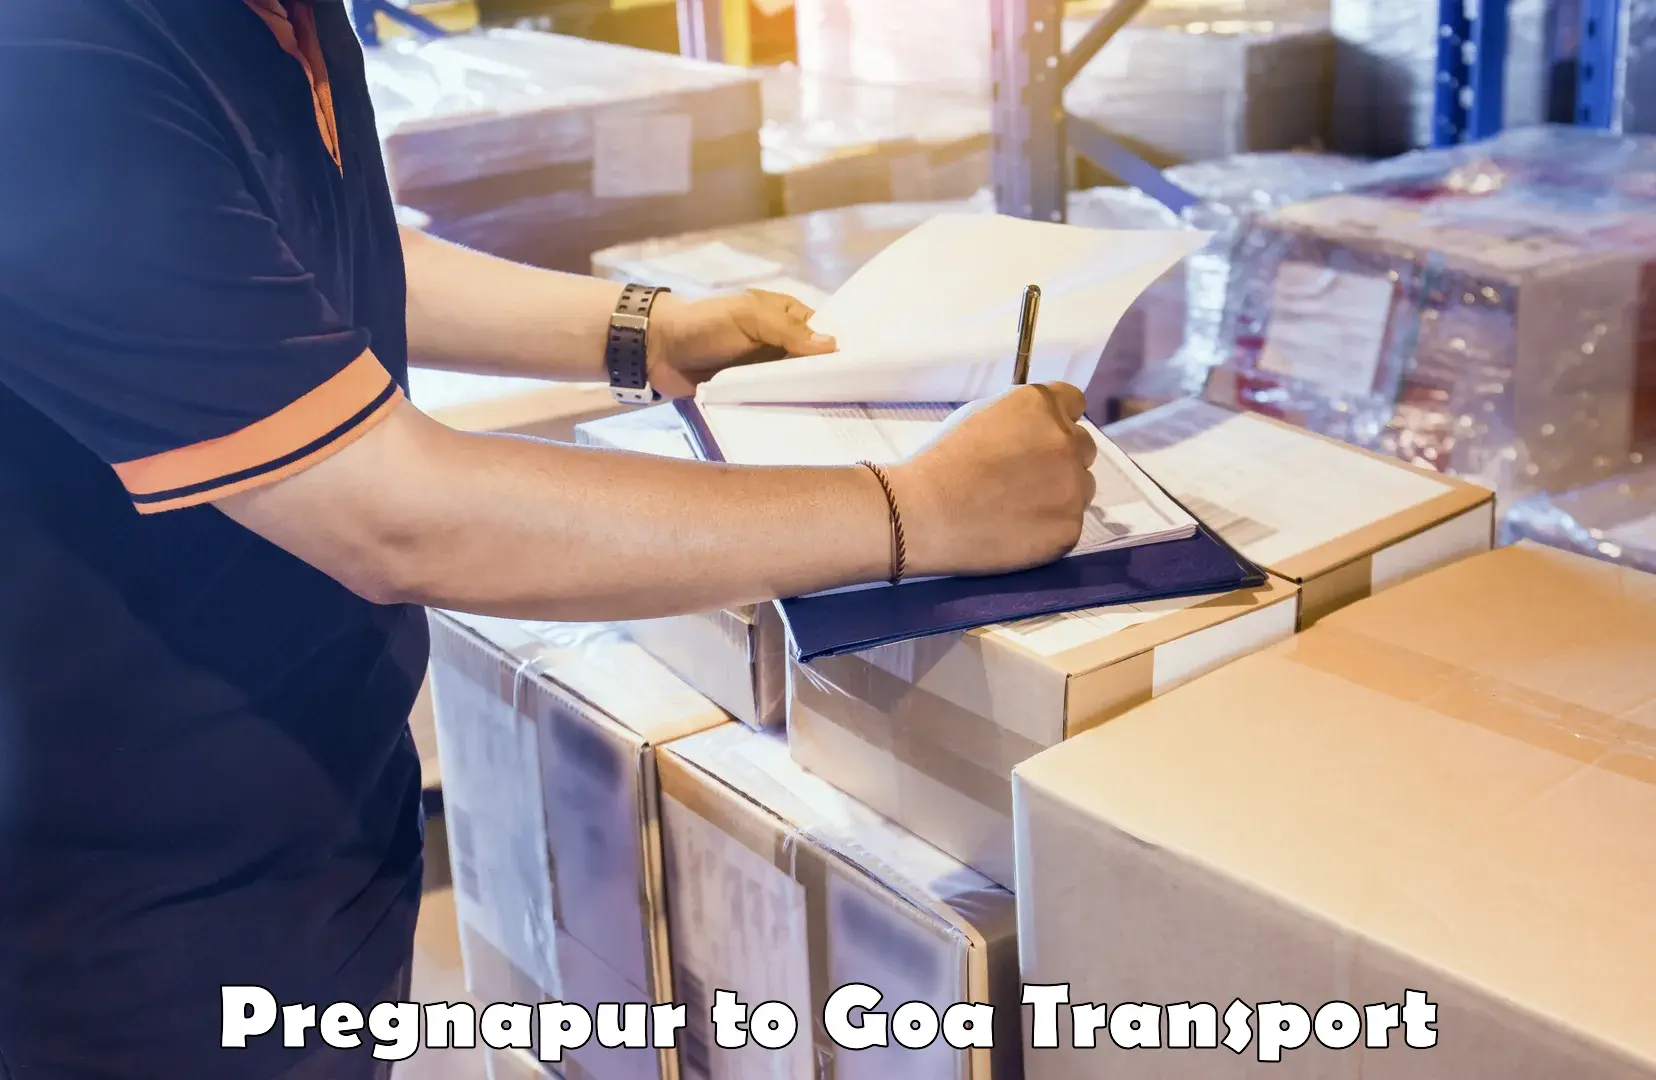 Lorry transport service Pregnapur to Goa University